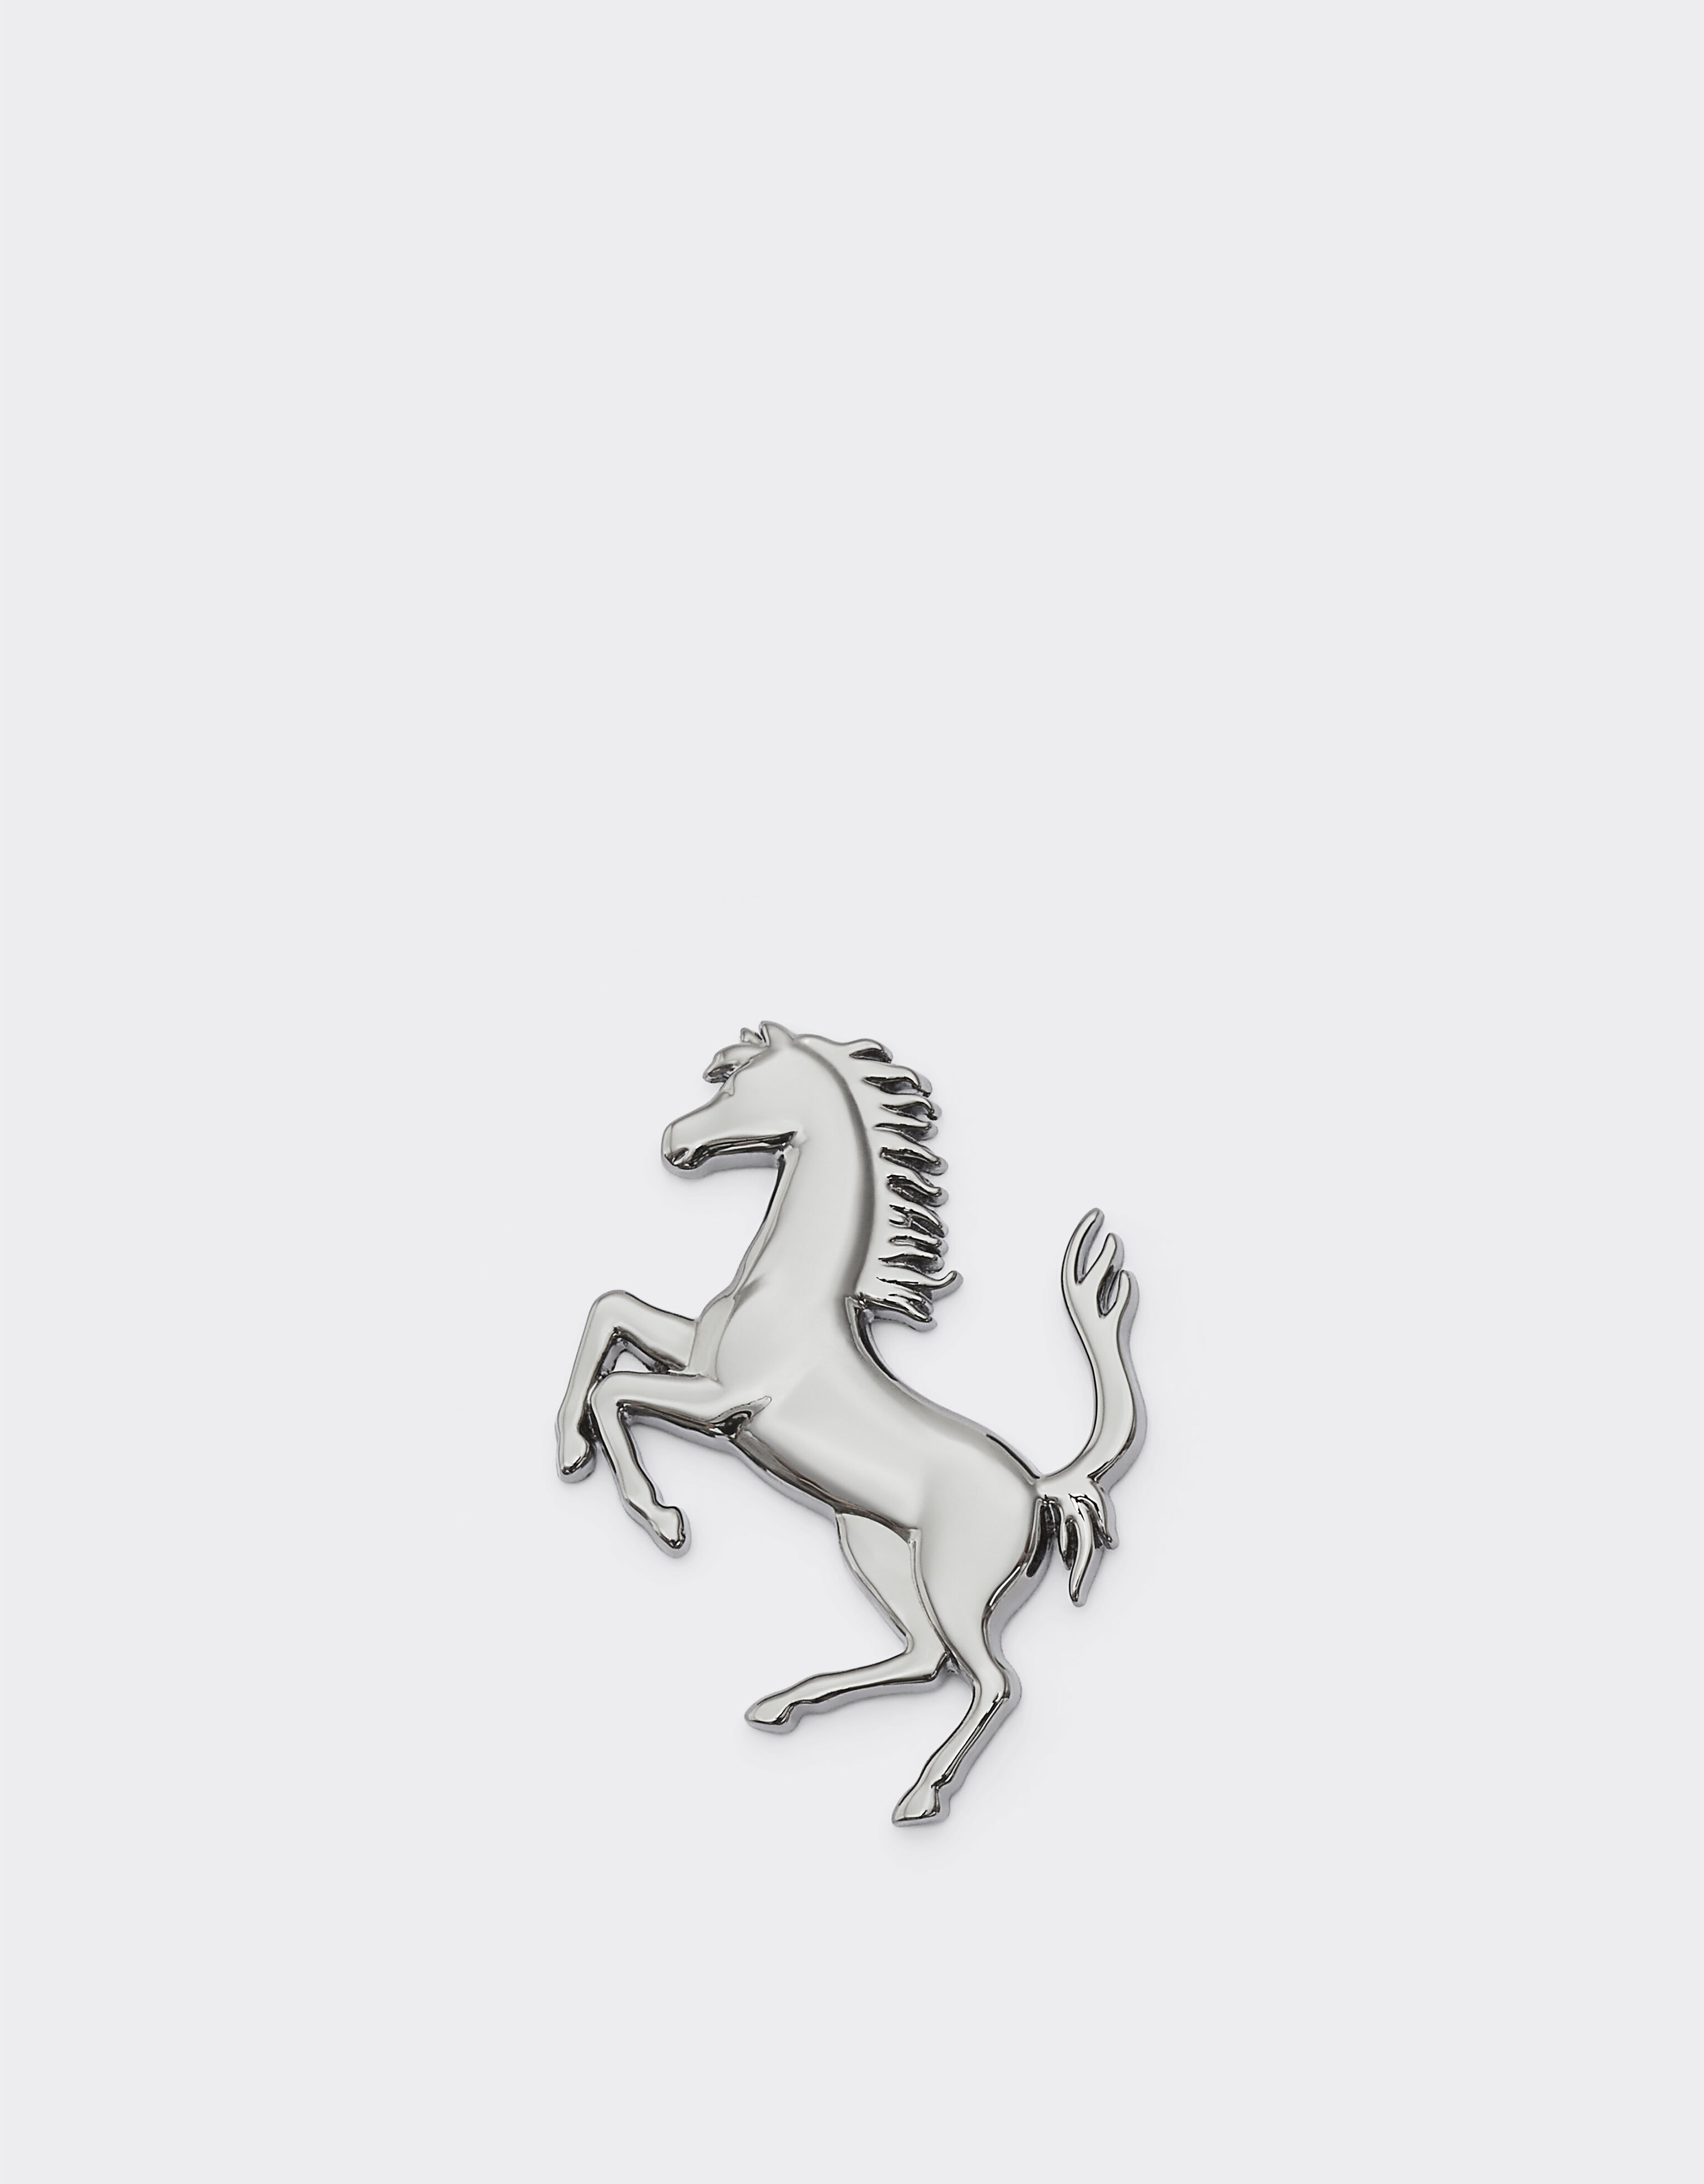 Ferrari Prancing Horse brooch Charcoal 20014f